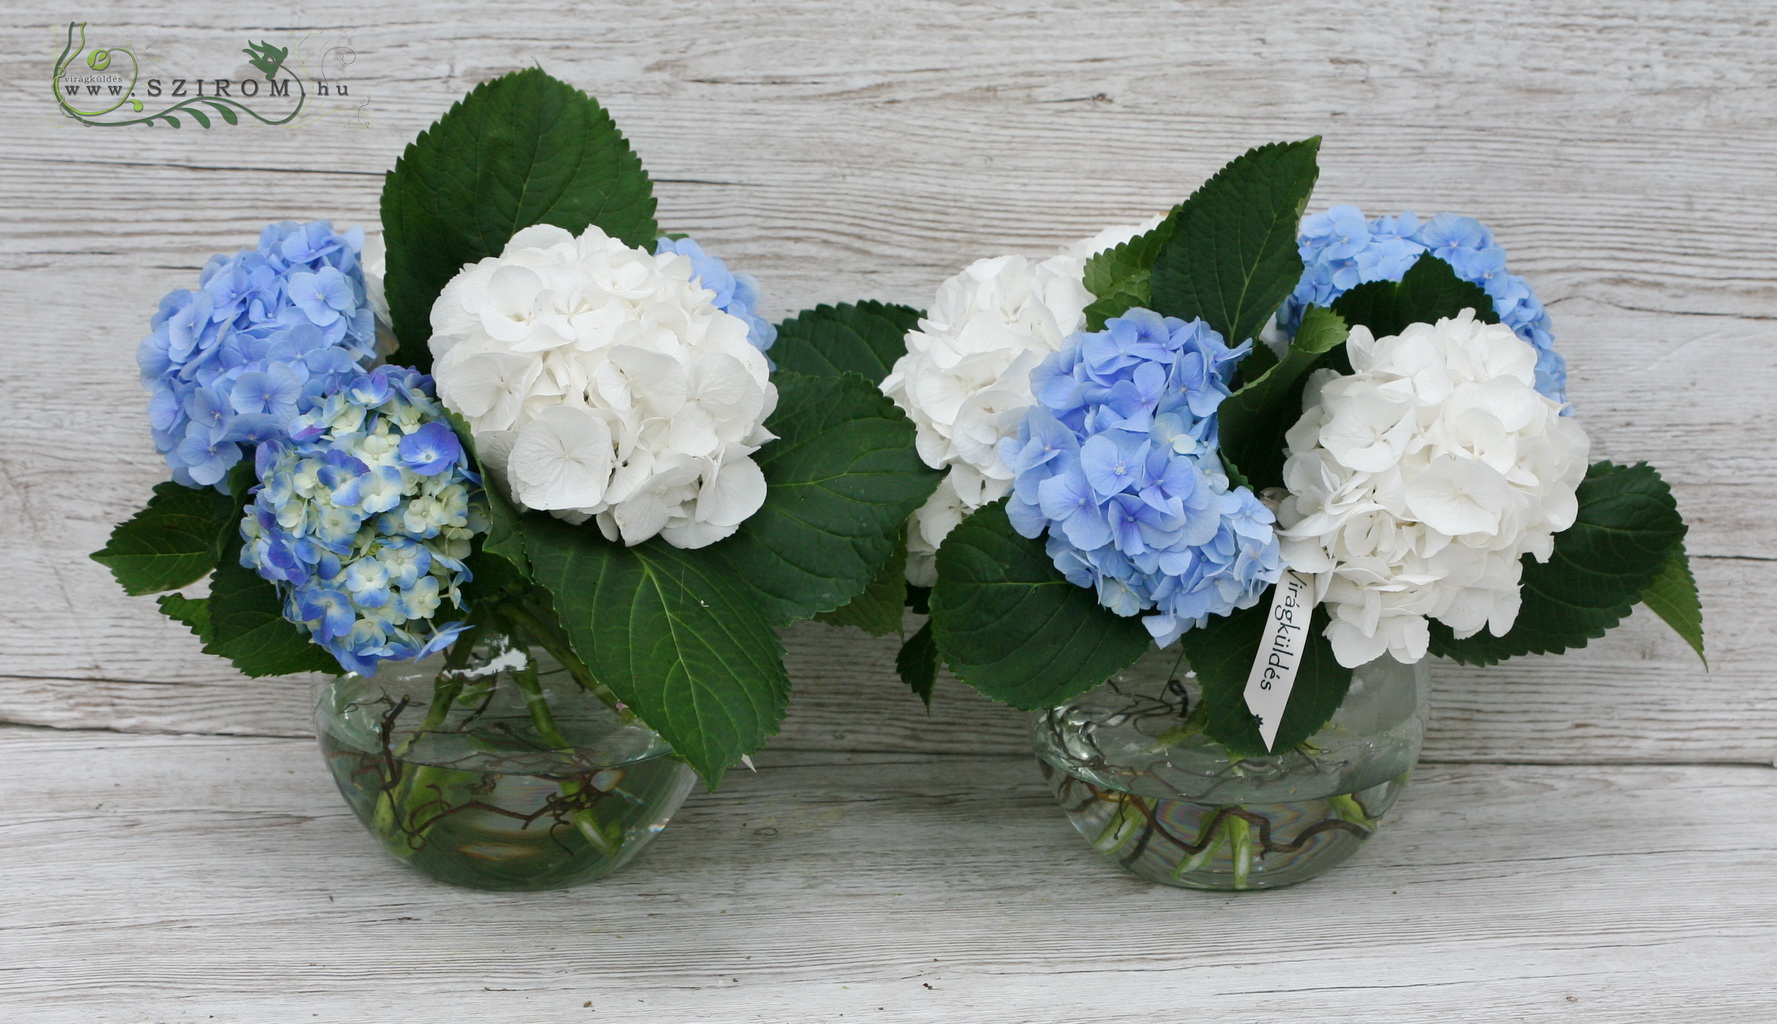 flower delivery Budapest - Centerpiece 1pc (hydrangea, white, blue), wedding 1pc